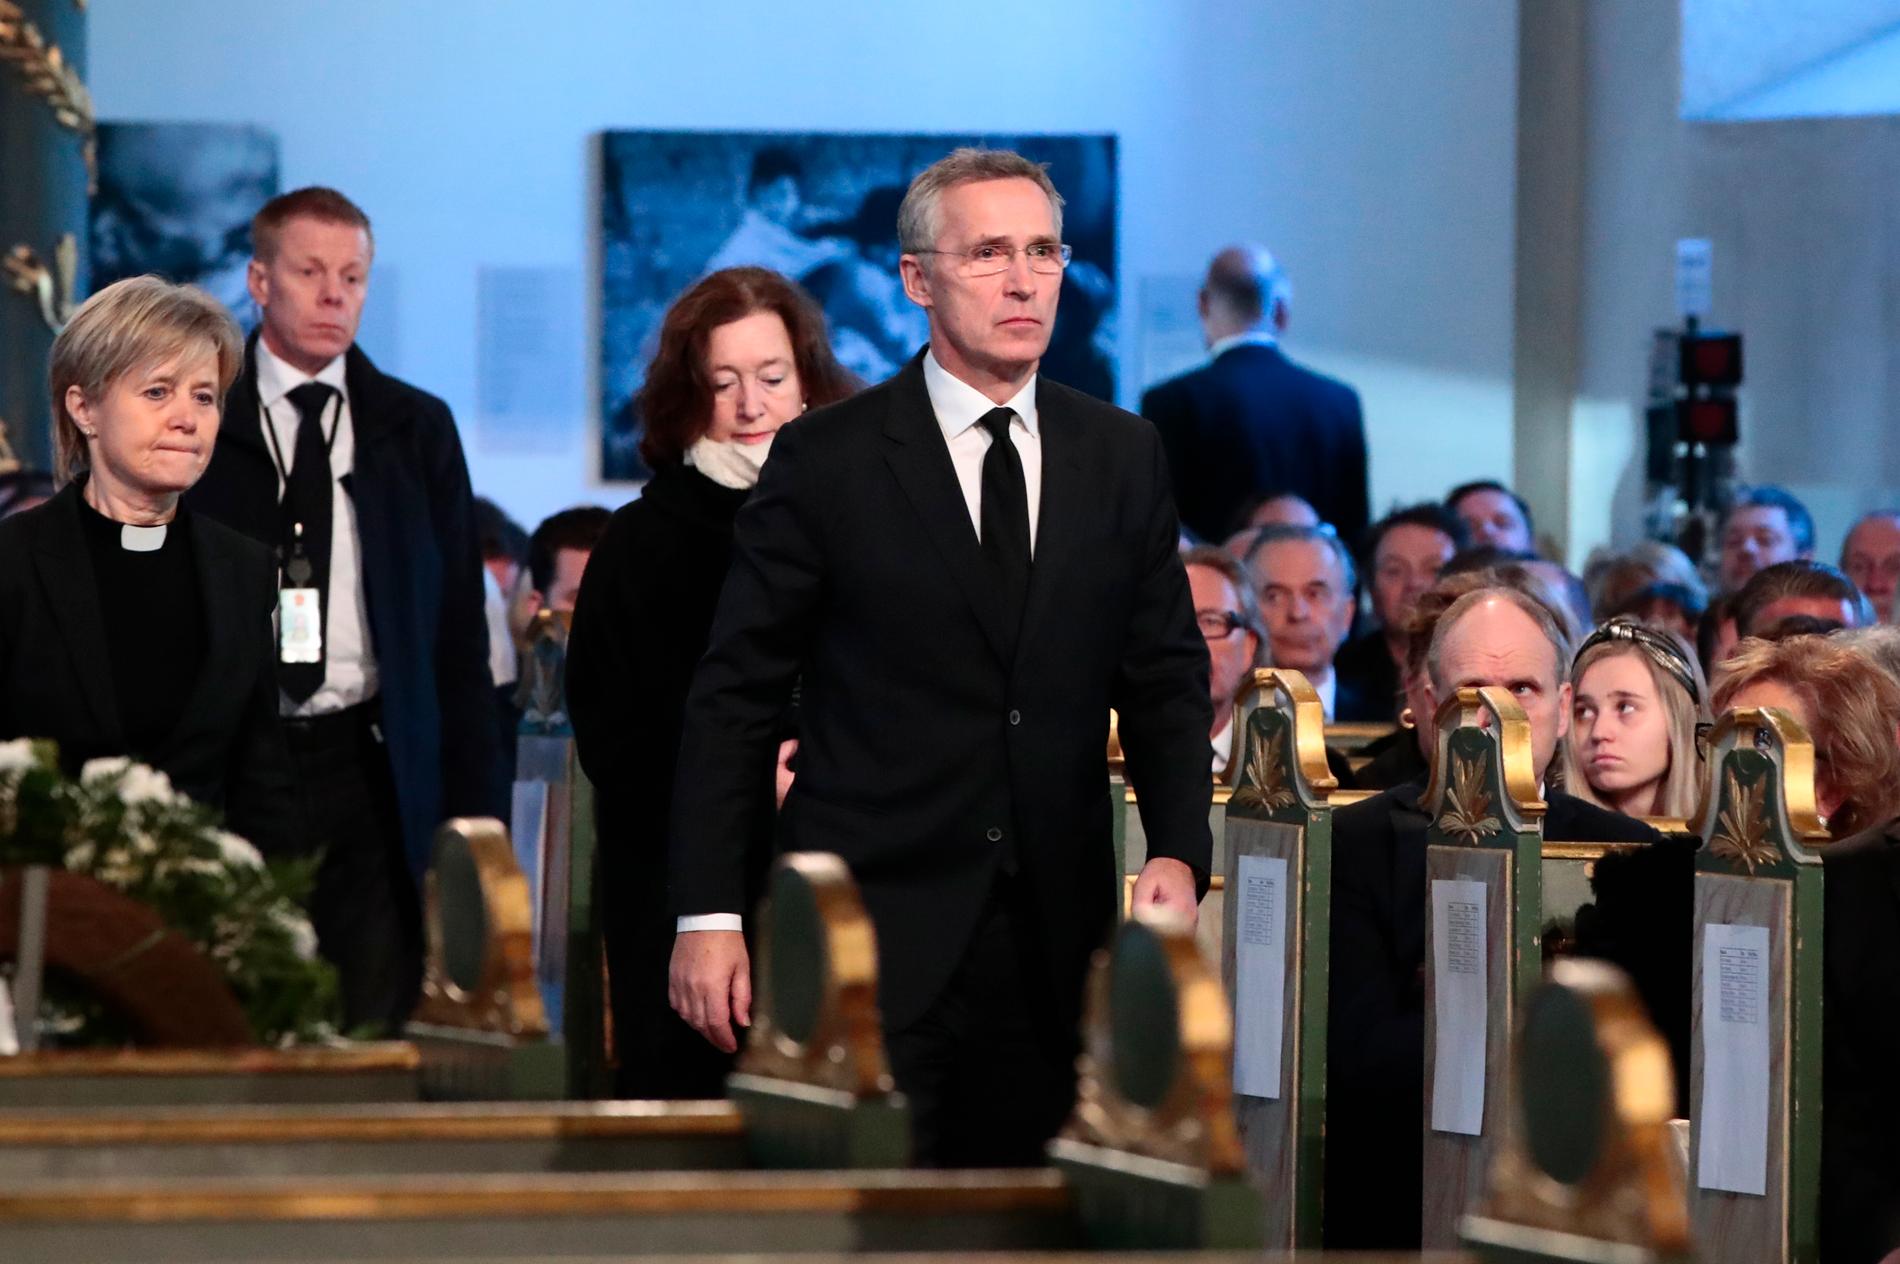 Begravningen av Ari Behn i Oslos domkyrka på fredagen. Jens Stoltenberg, NATO’s generalsekreterare.